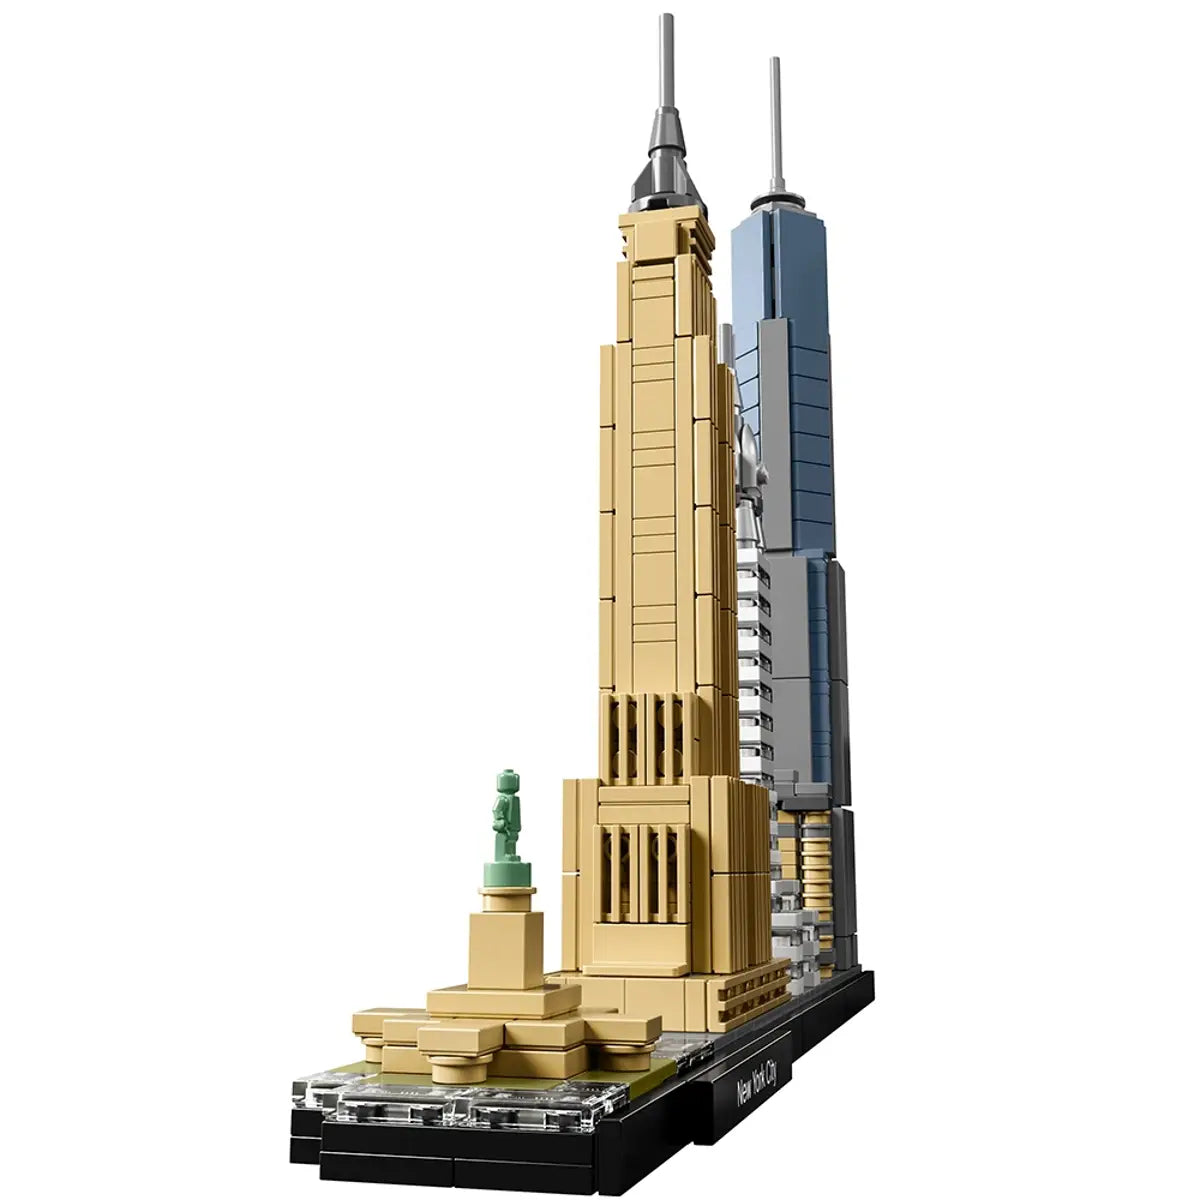 LEGO - Architecture - New York City - 21028